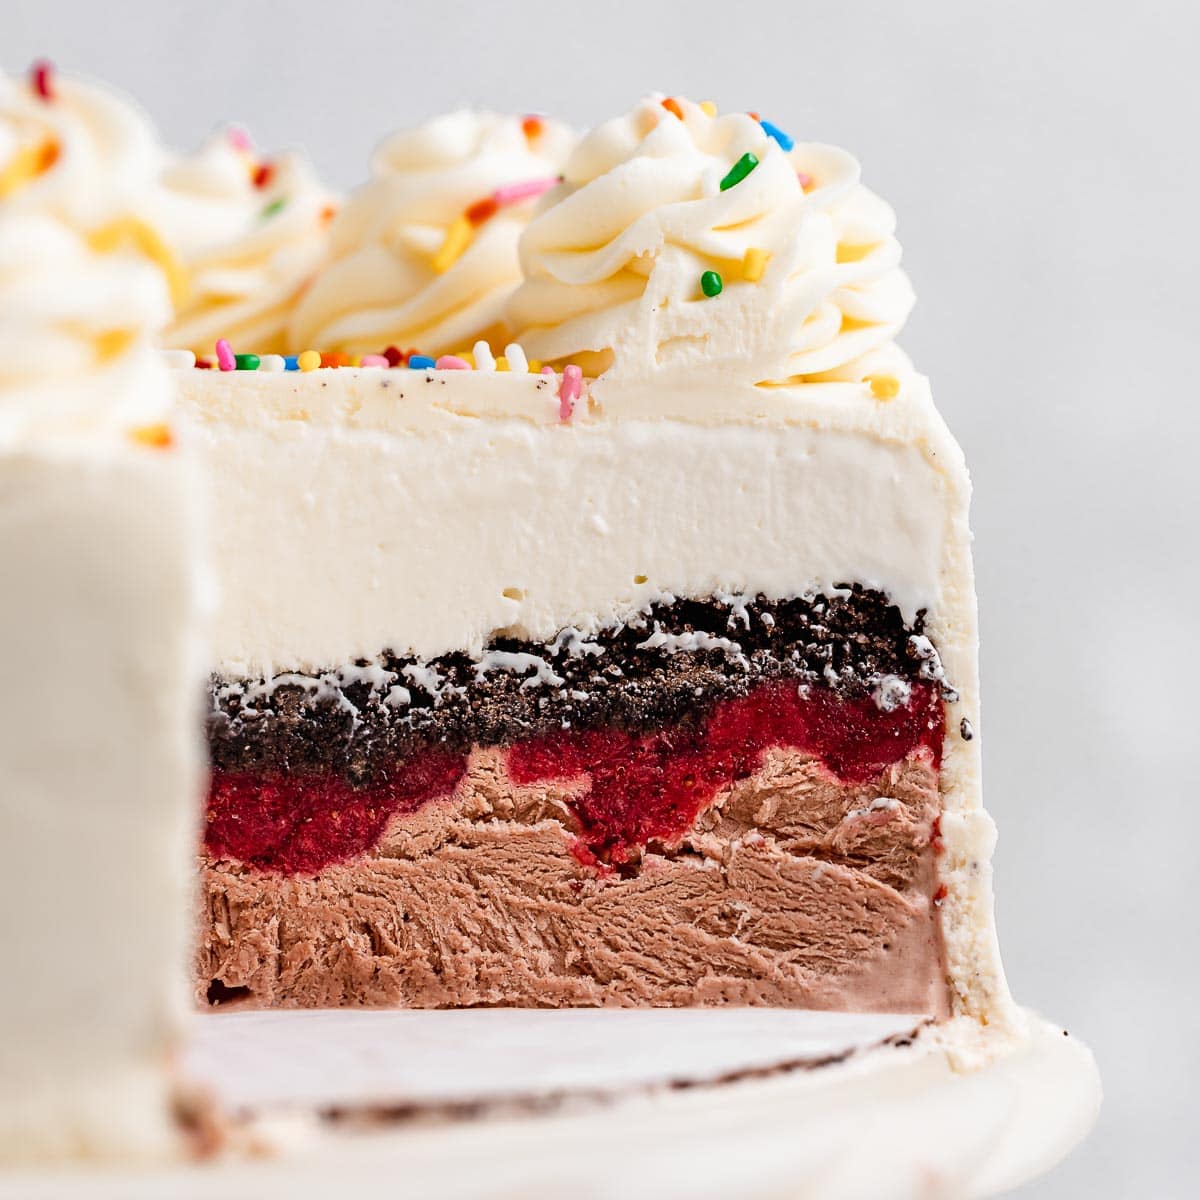 Ice Cream Cake – Croc's Playcentre